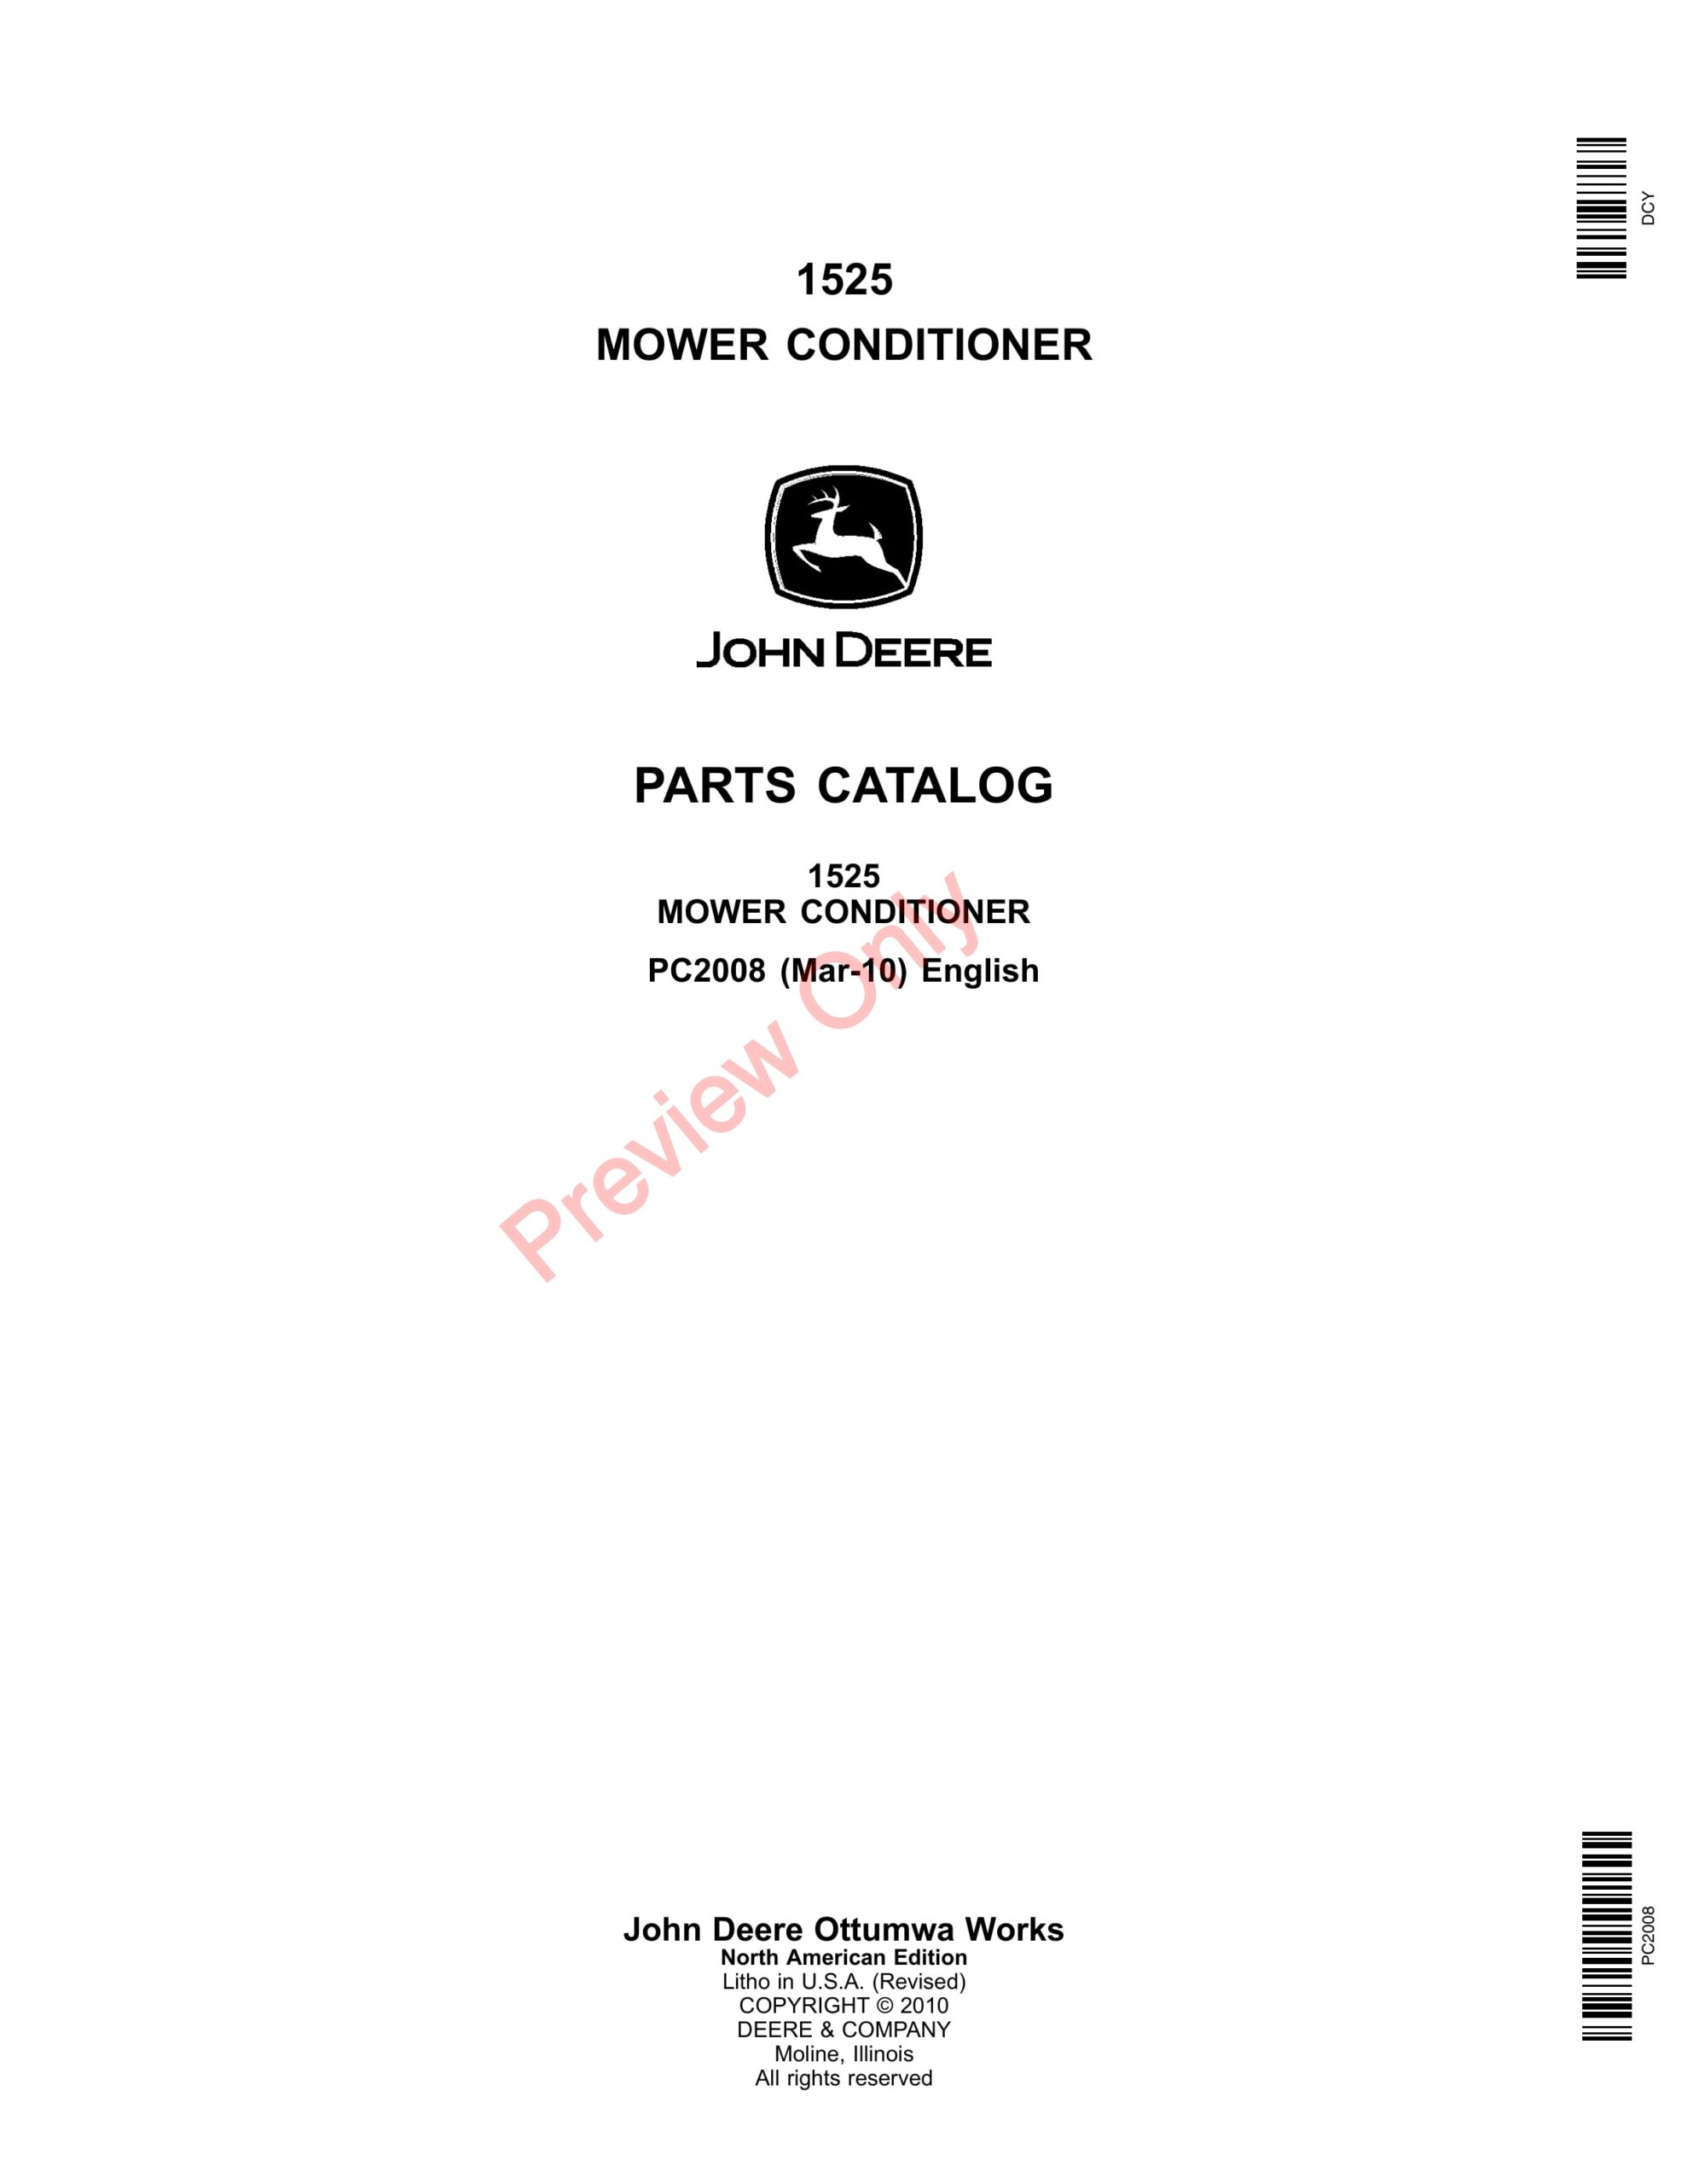 John Deere 1525 Mower Conditioner Parts Catalog PC2008 09MAY11-1